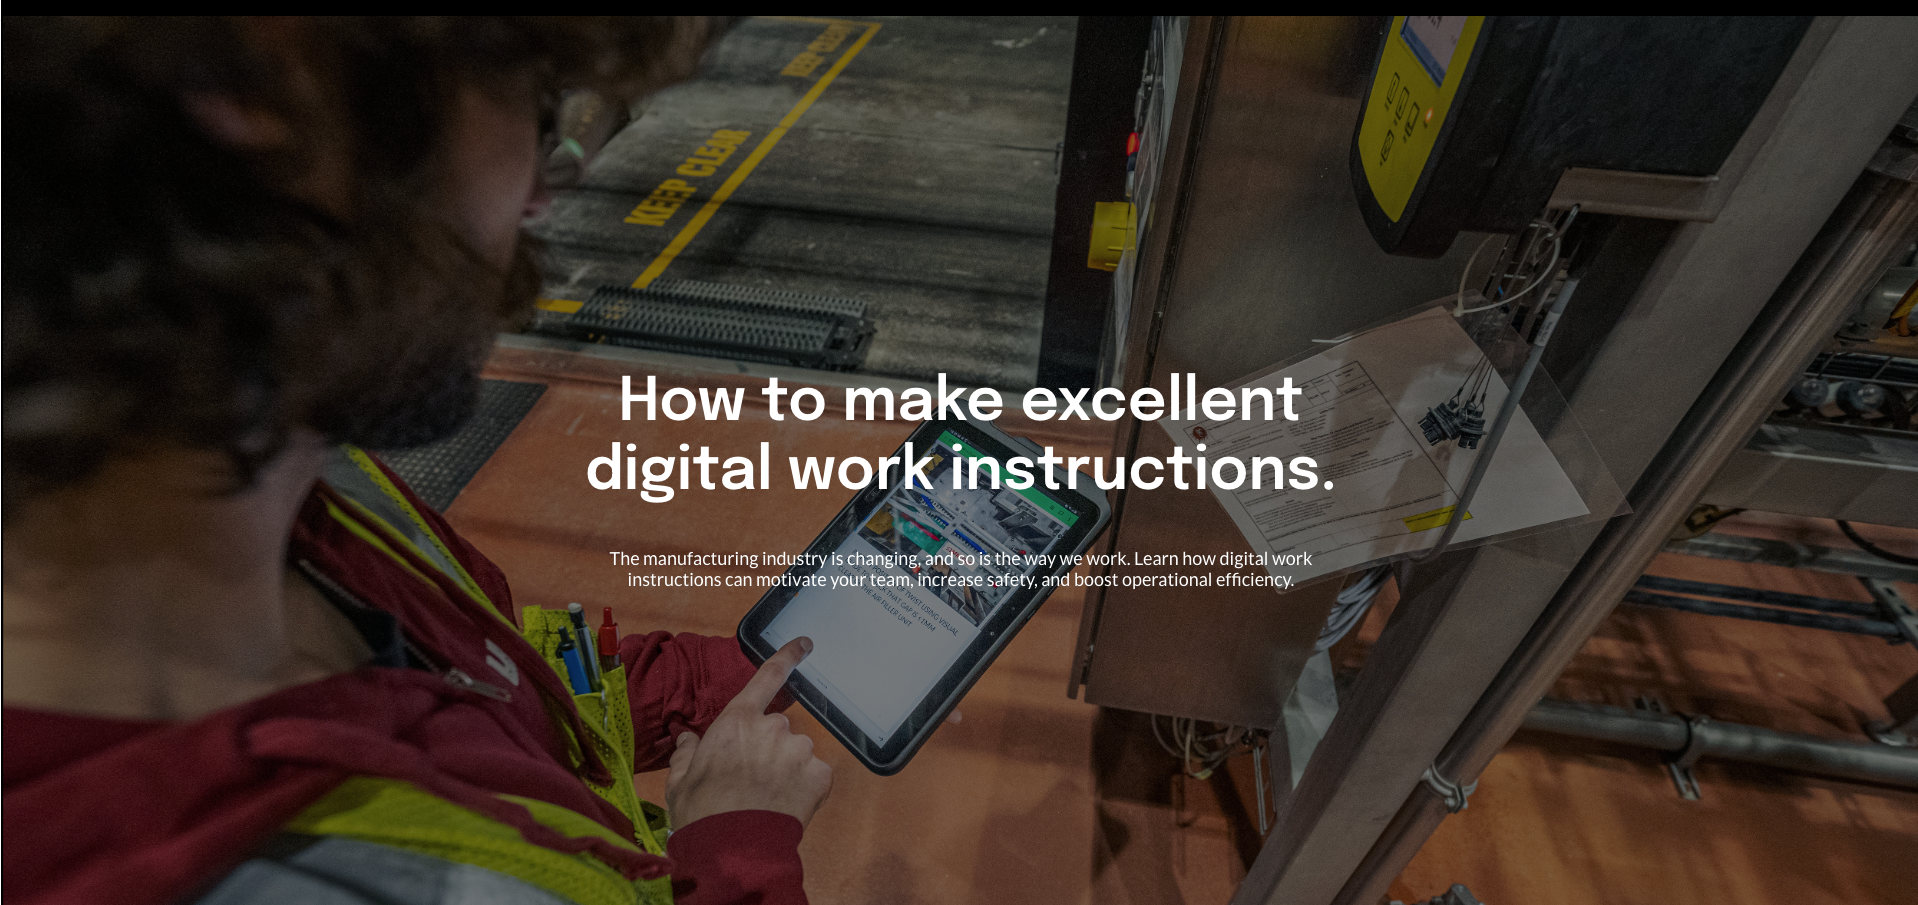 Digital work instructions